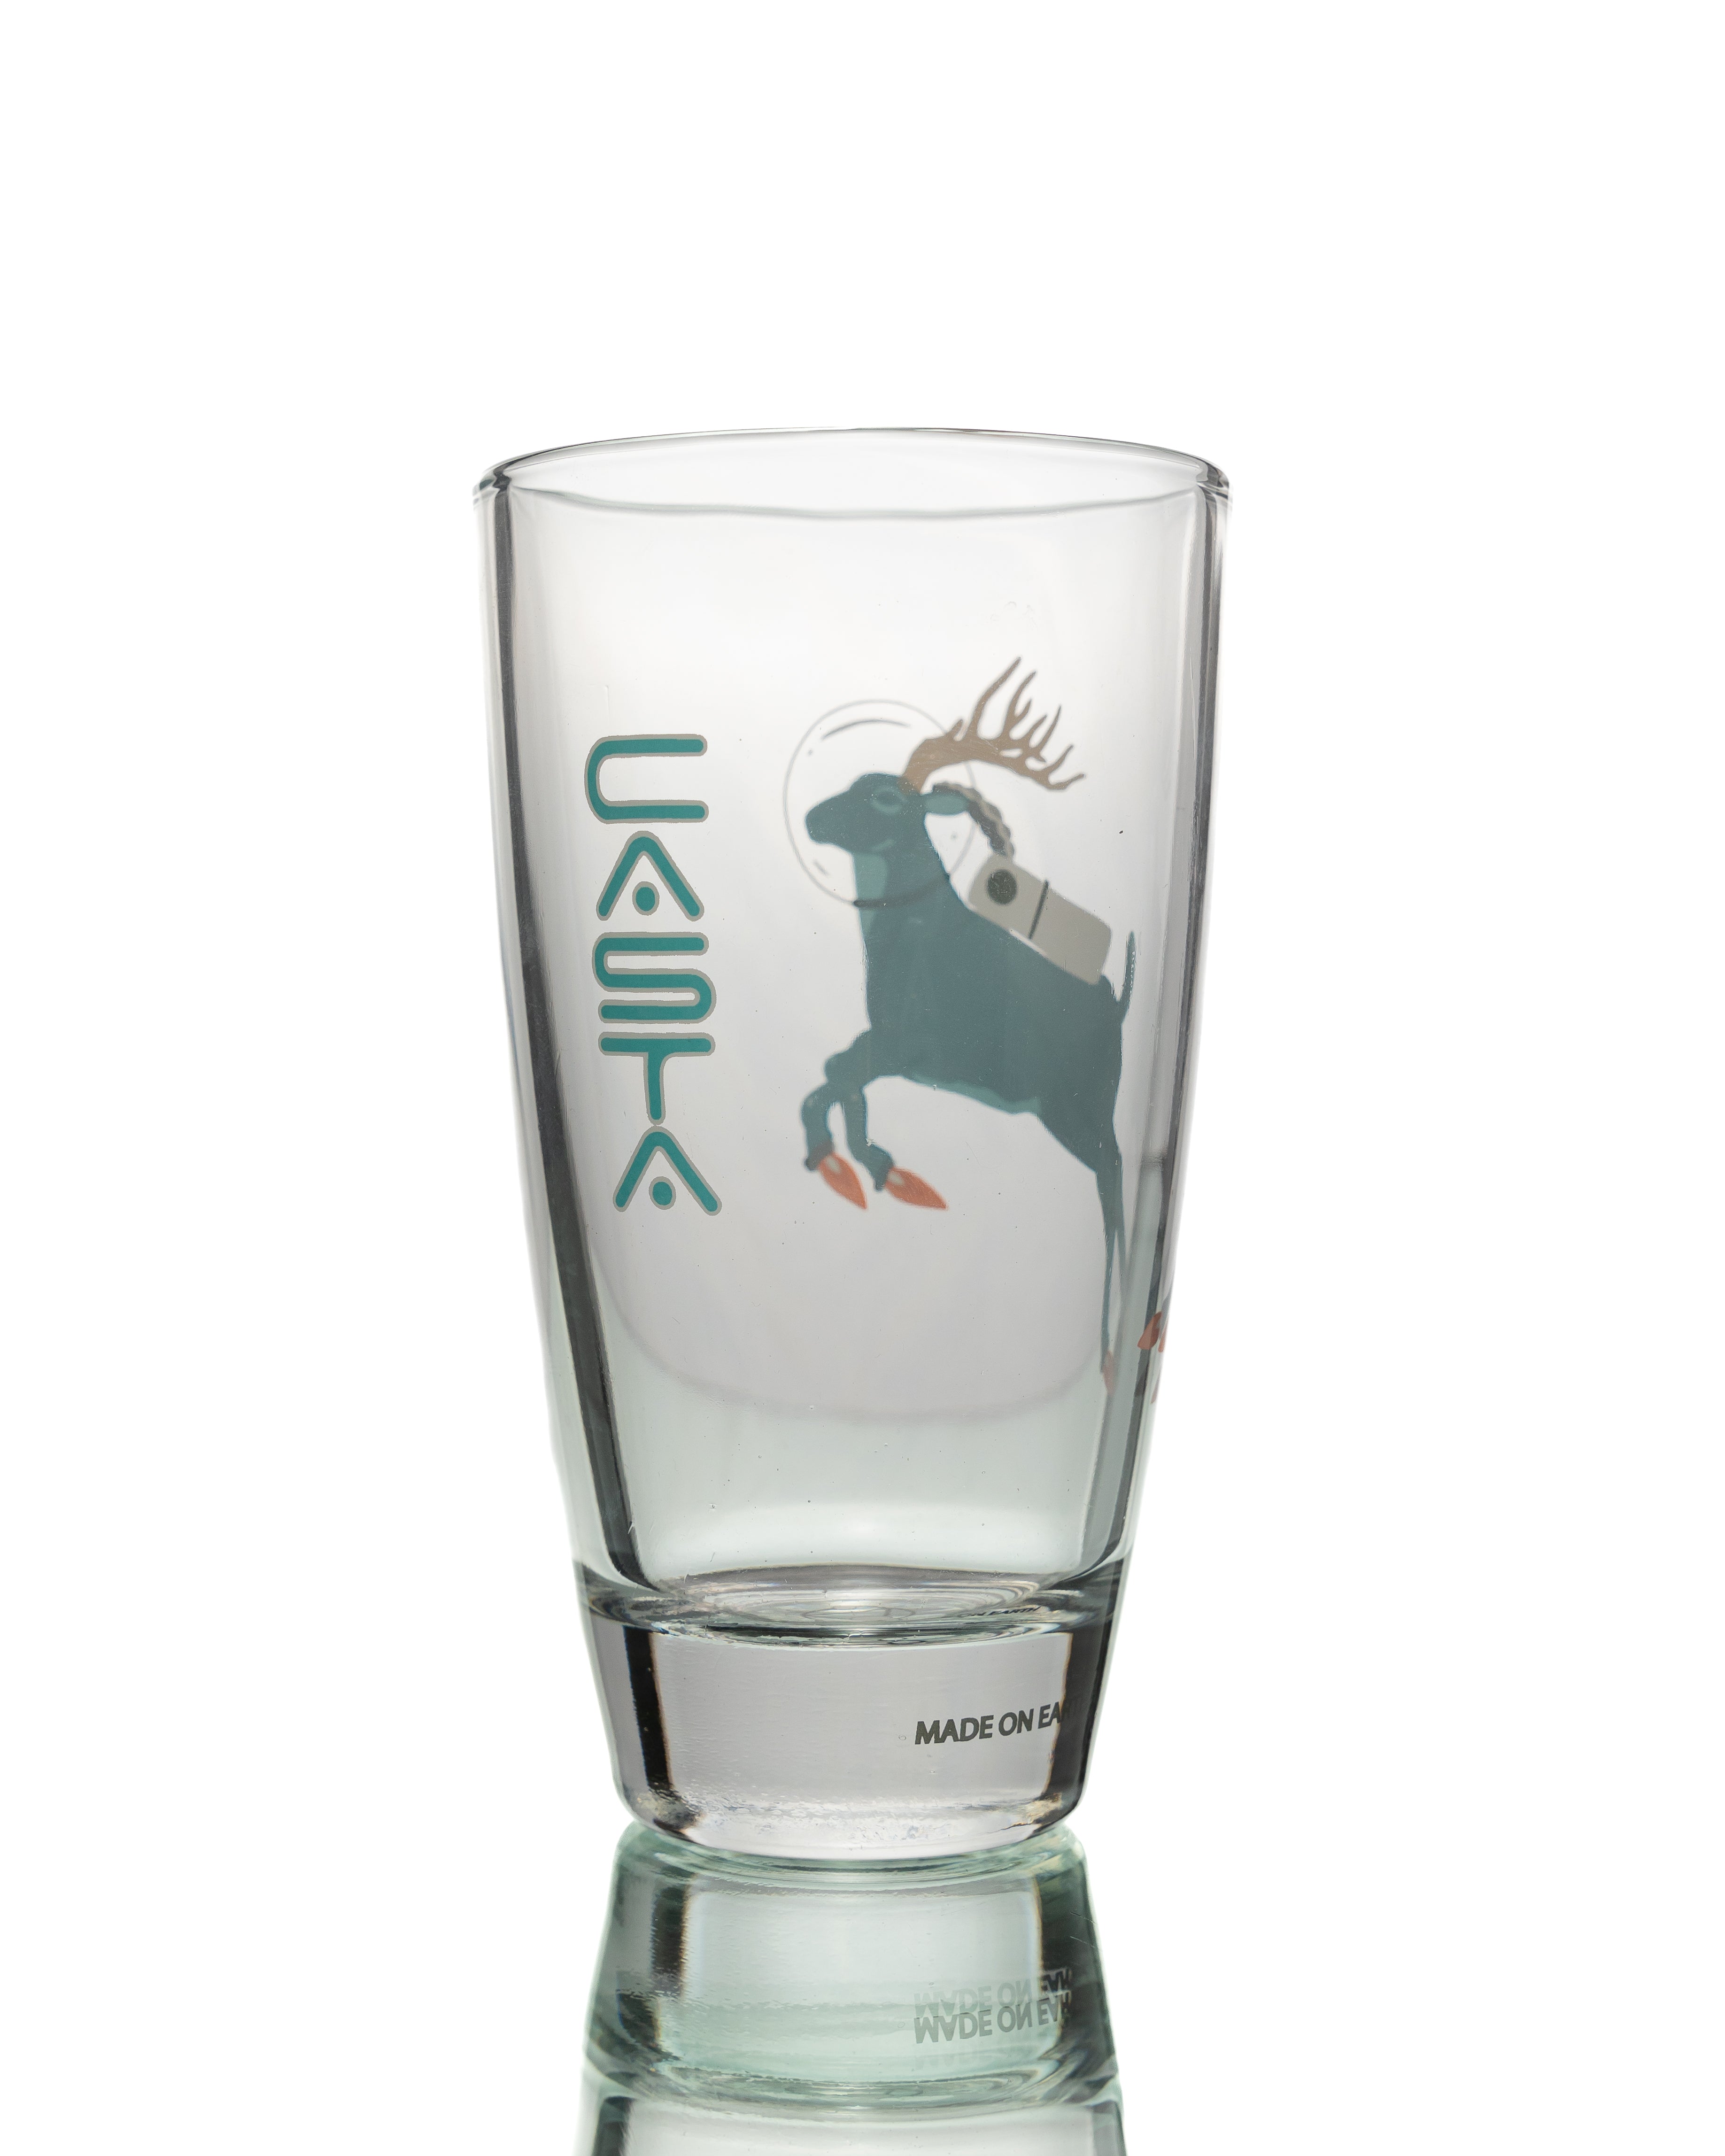 Casta Glass - Drinking Glass